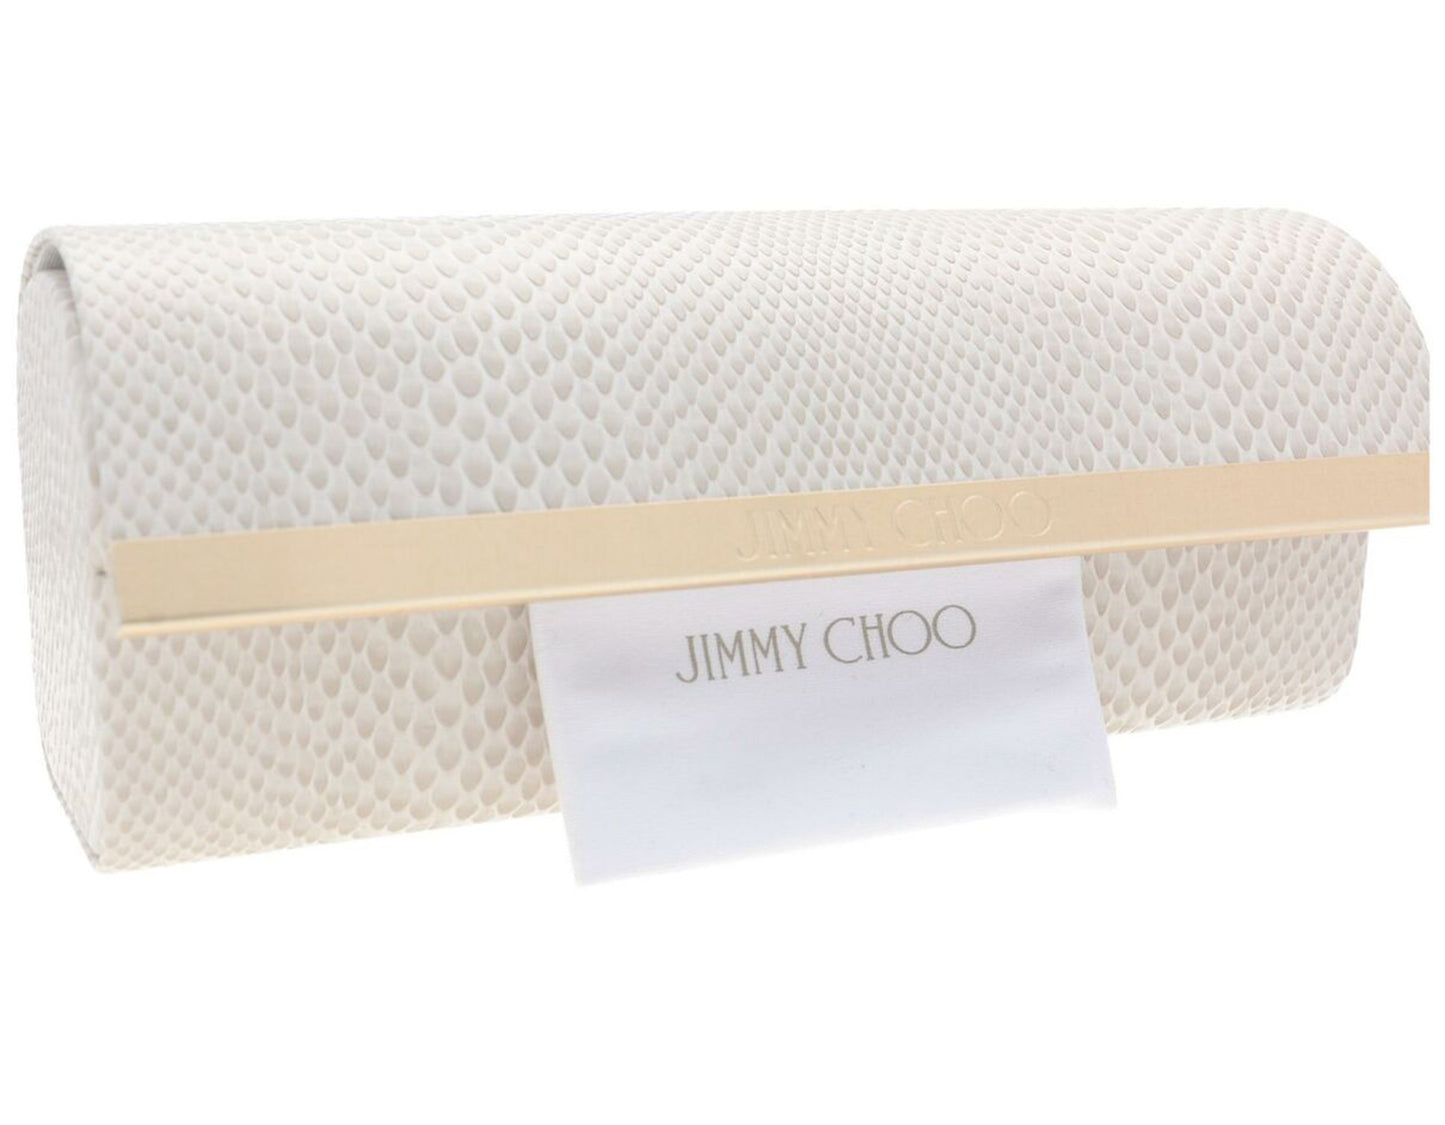 Jimmy Choo JC295-06K3 53mm New Eyeglasses